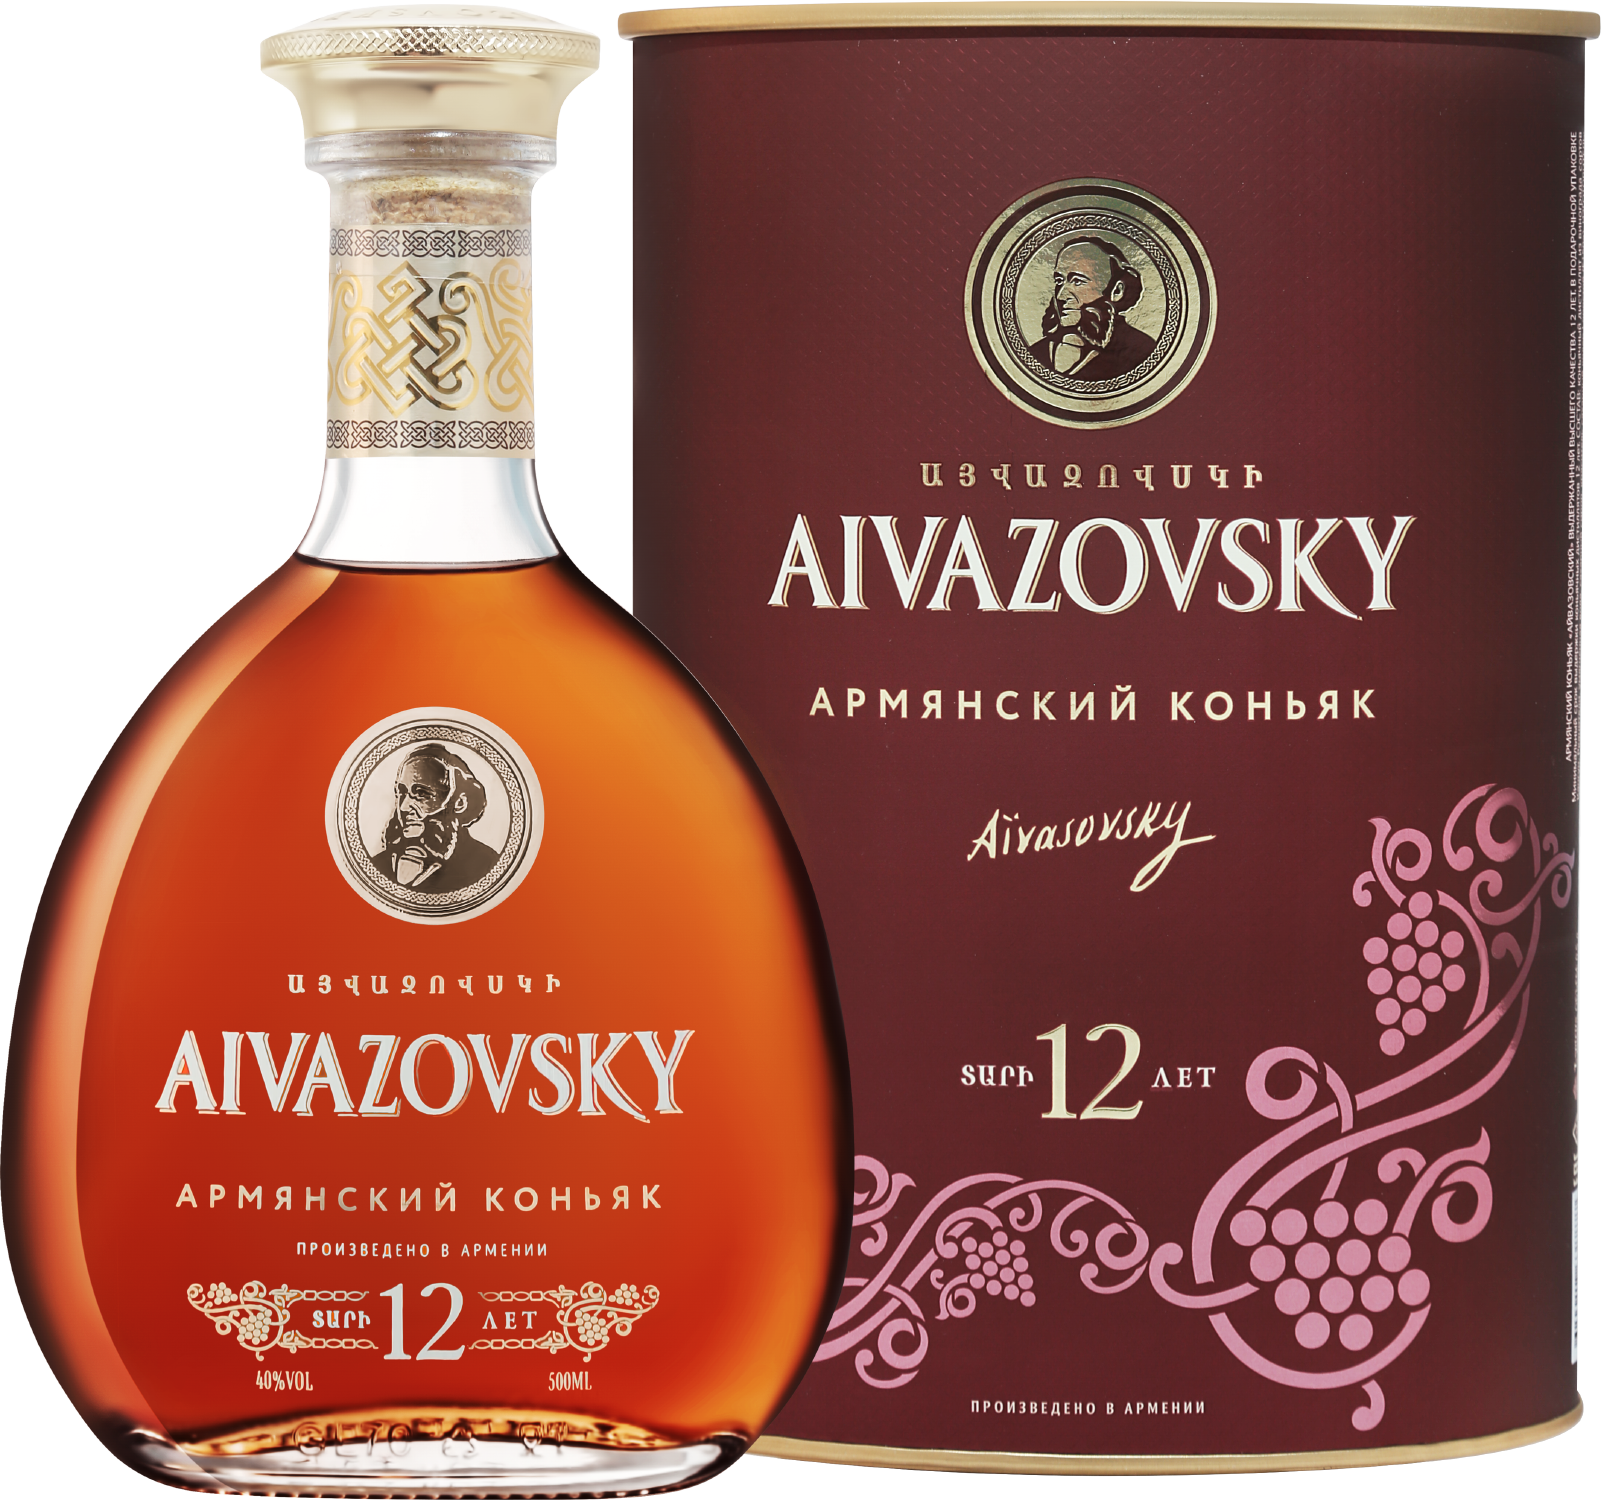 Aivazovsky Old Armenian Brandy 12 Y.O. (gift box) aivazovsky armenian brandy 7 y o gift box